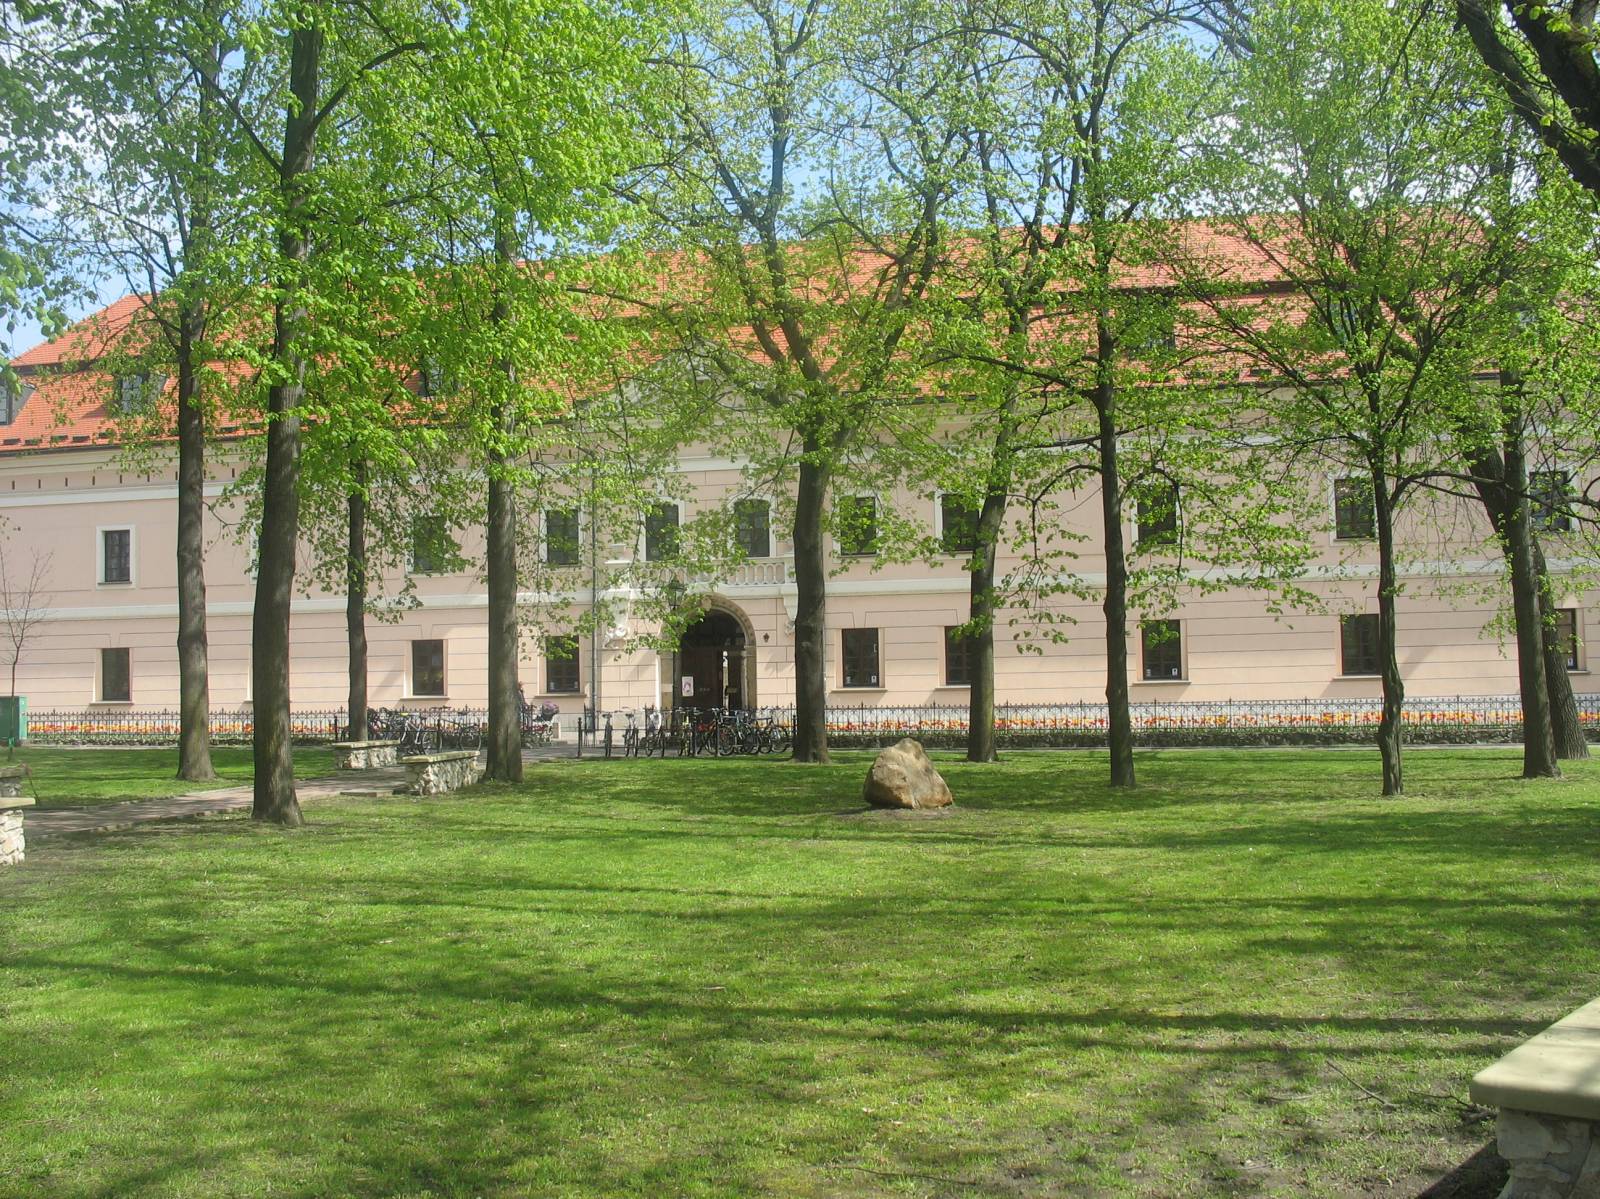 Royal Castle in Niepołomice